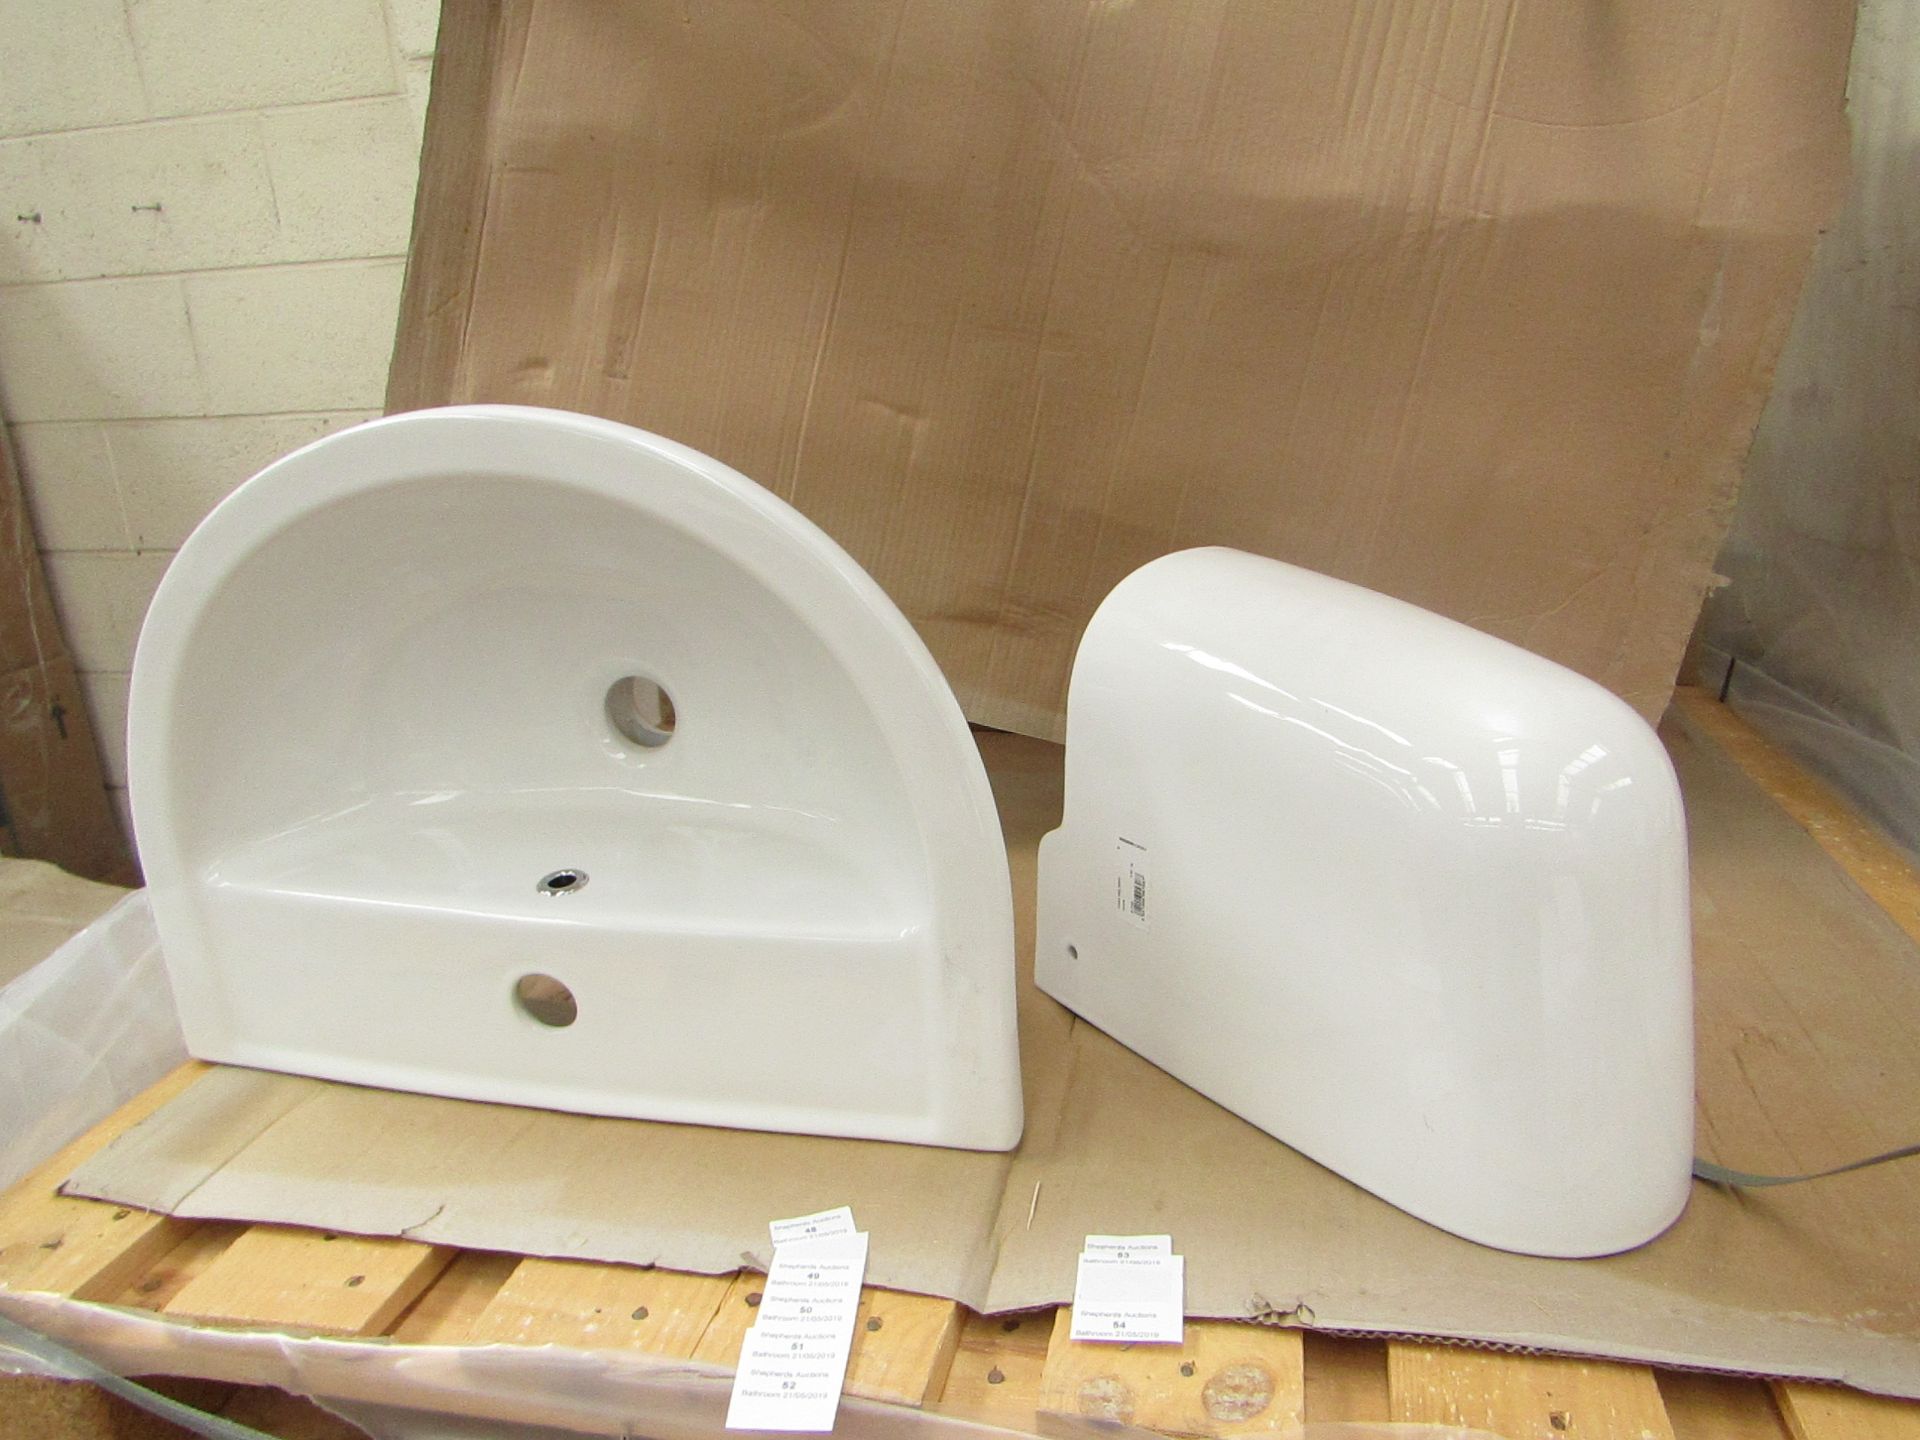 Lecico Remini 50cm 1 tap hole basin with Remini semi pedestal, unused and boxed